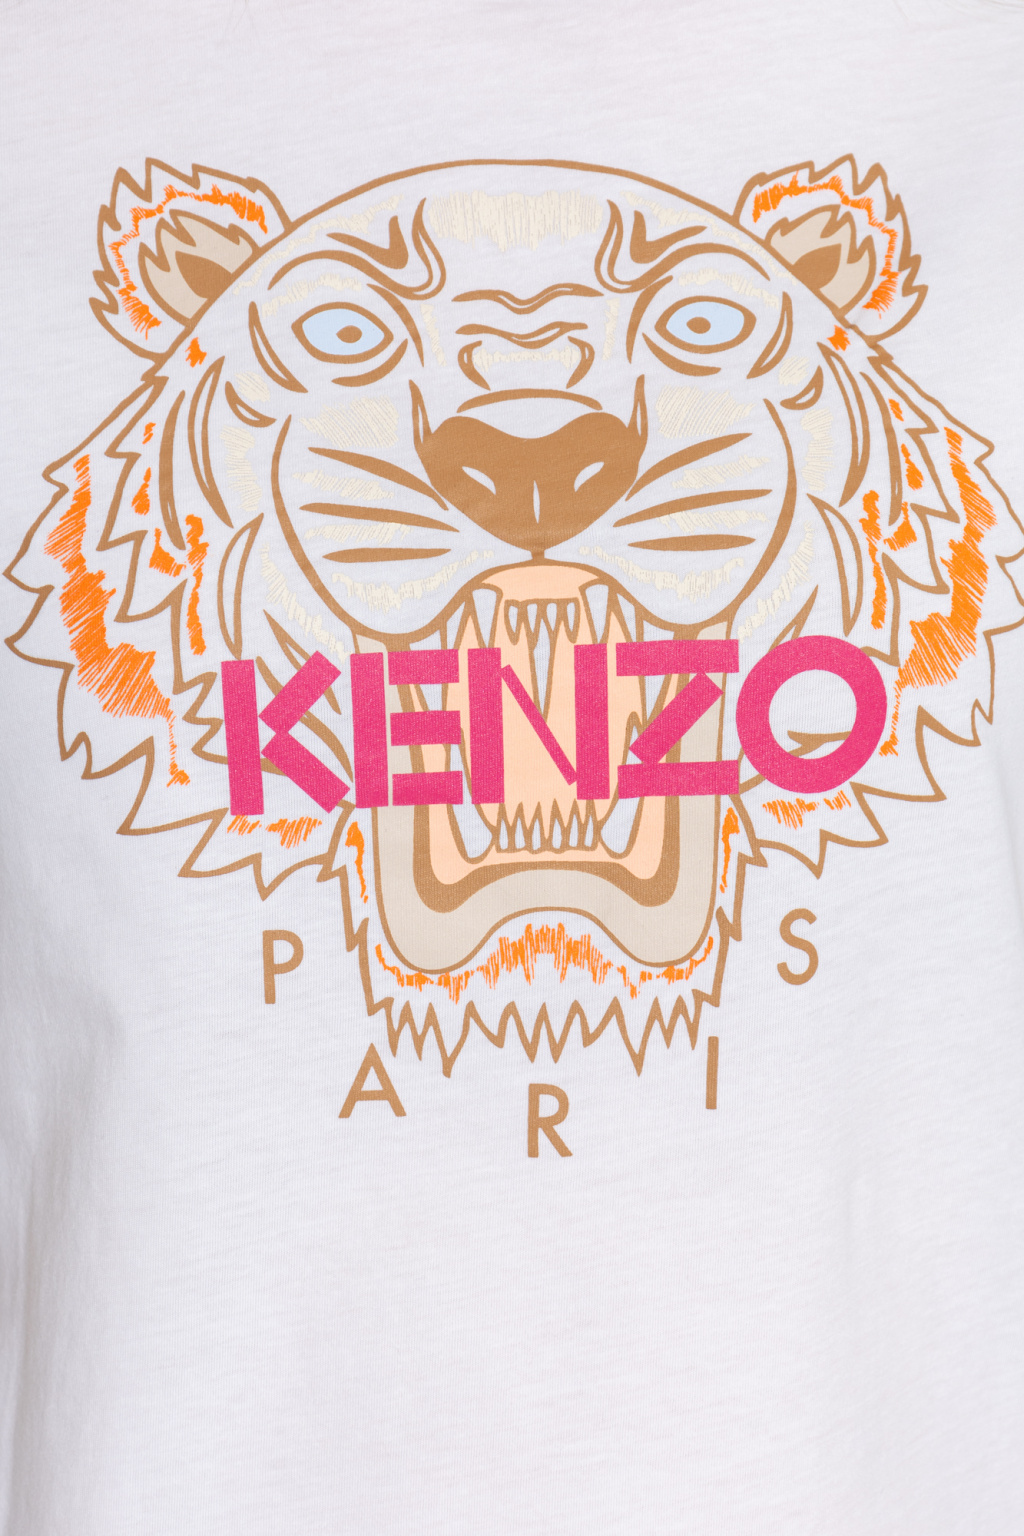 Kenzo gazman clothing shirts polos